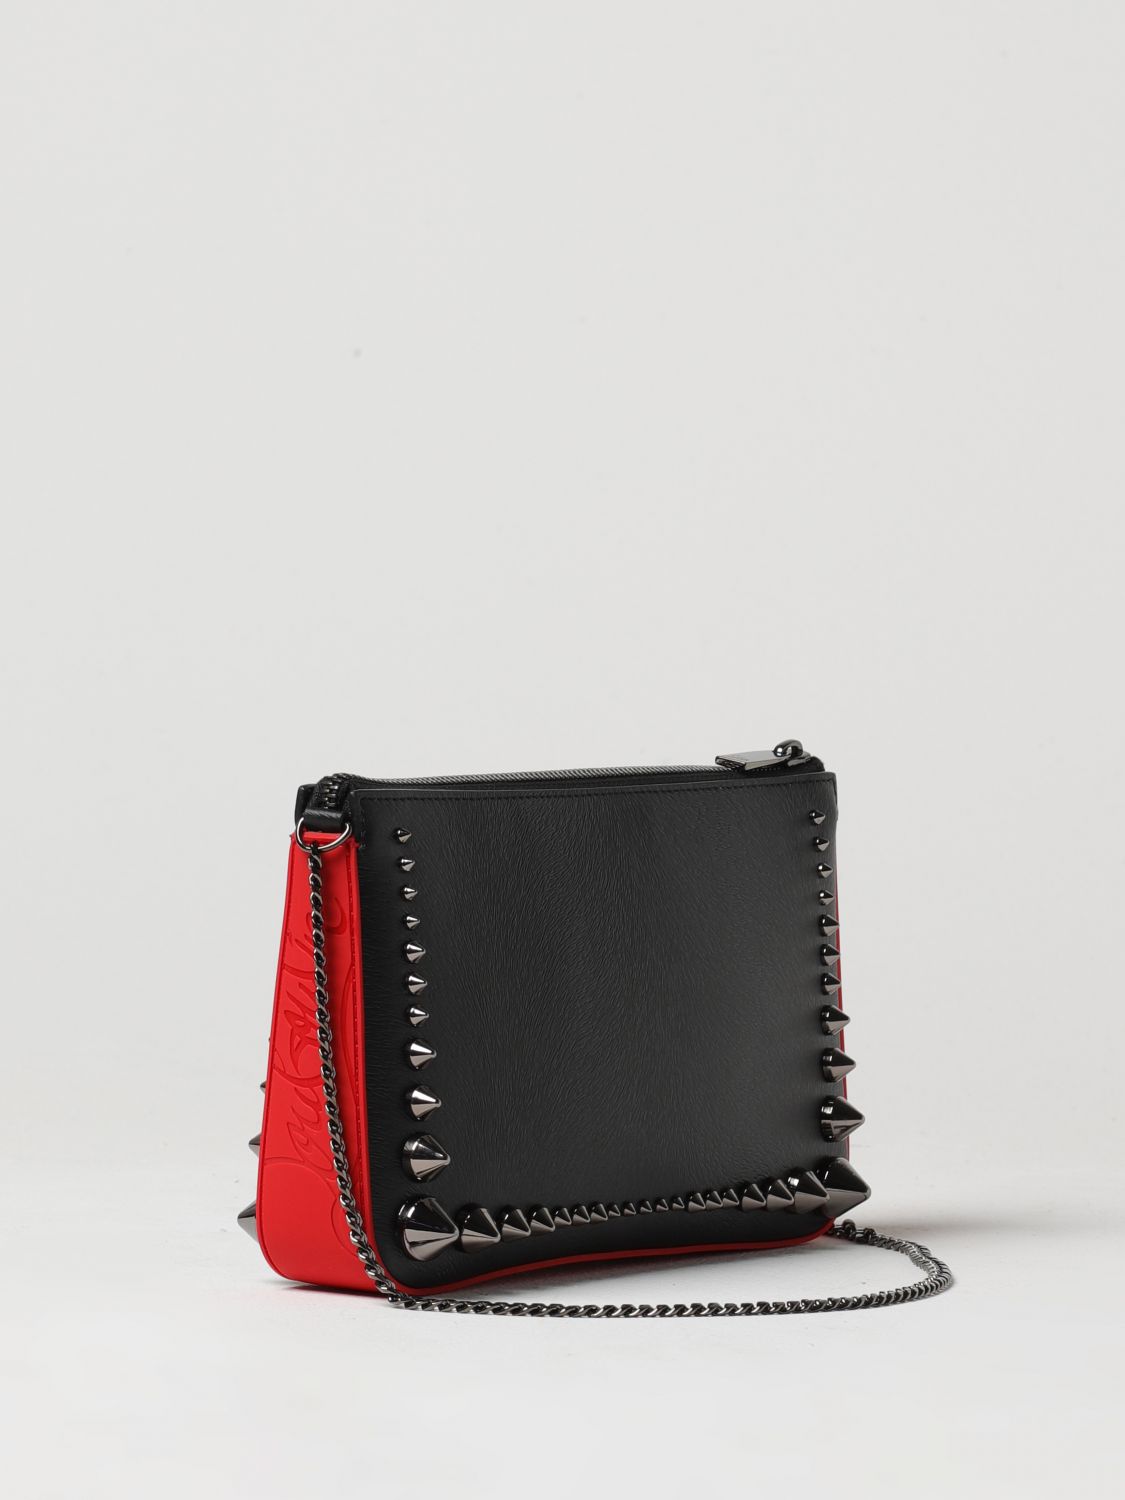 Loubila - Shoulder bag - Calf leather, rubber and spikes - Black